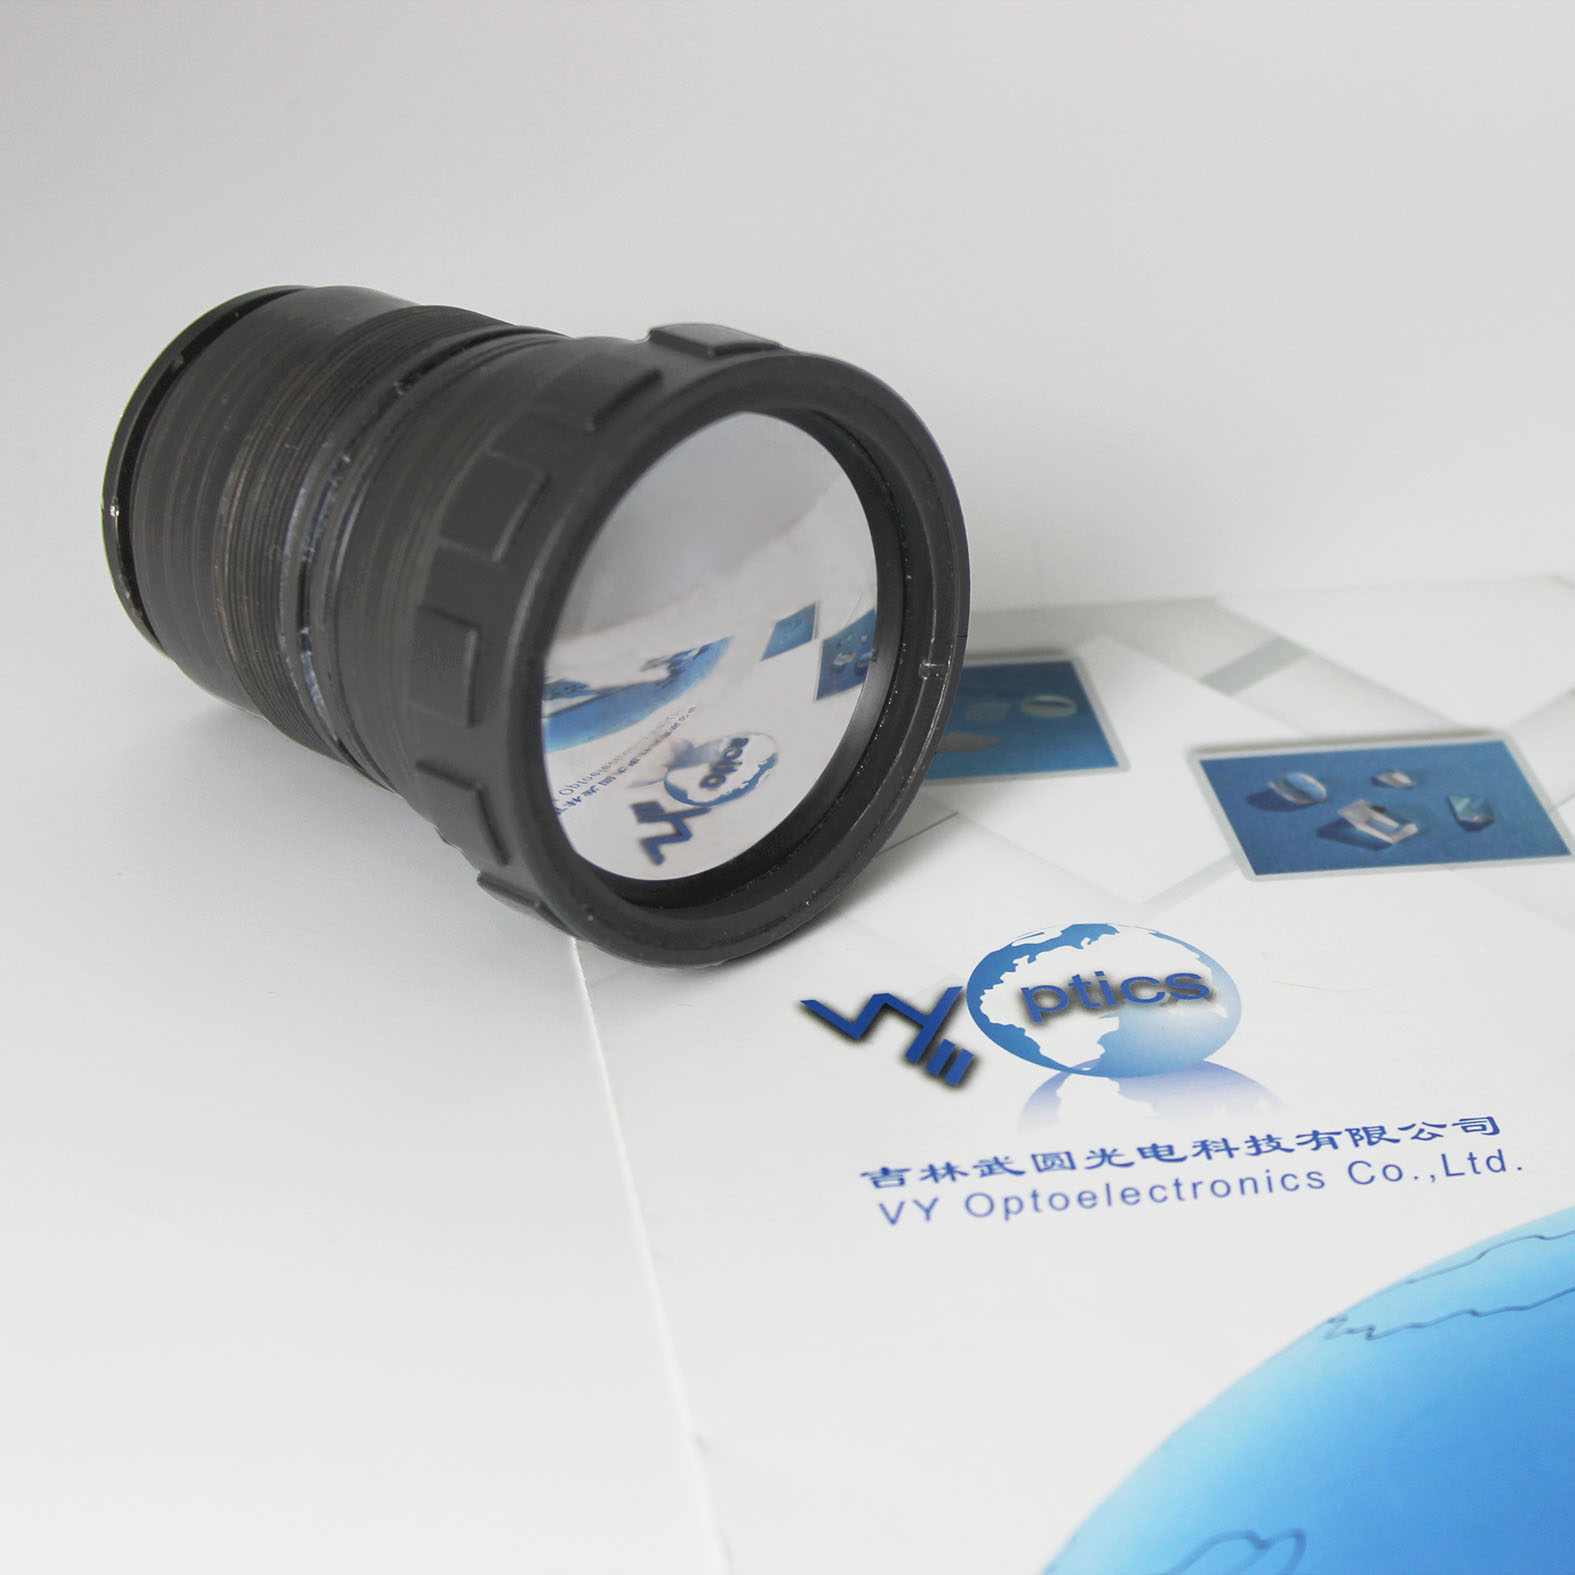 China High Performance Focusing Manually IR Thermal Imaging Optical Infrared Lens